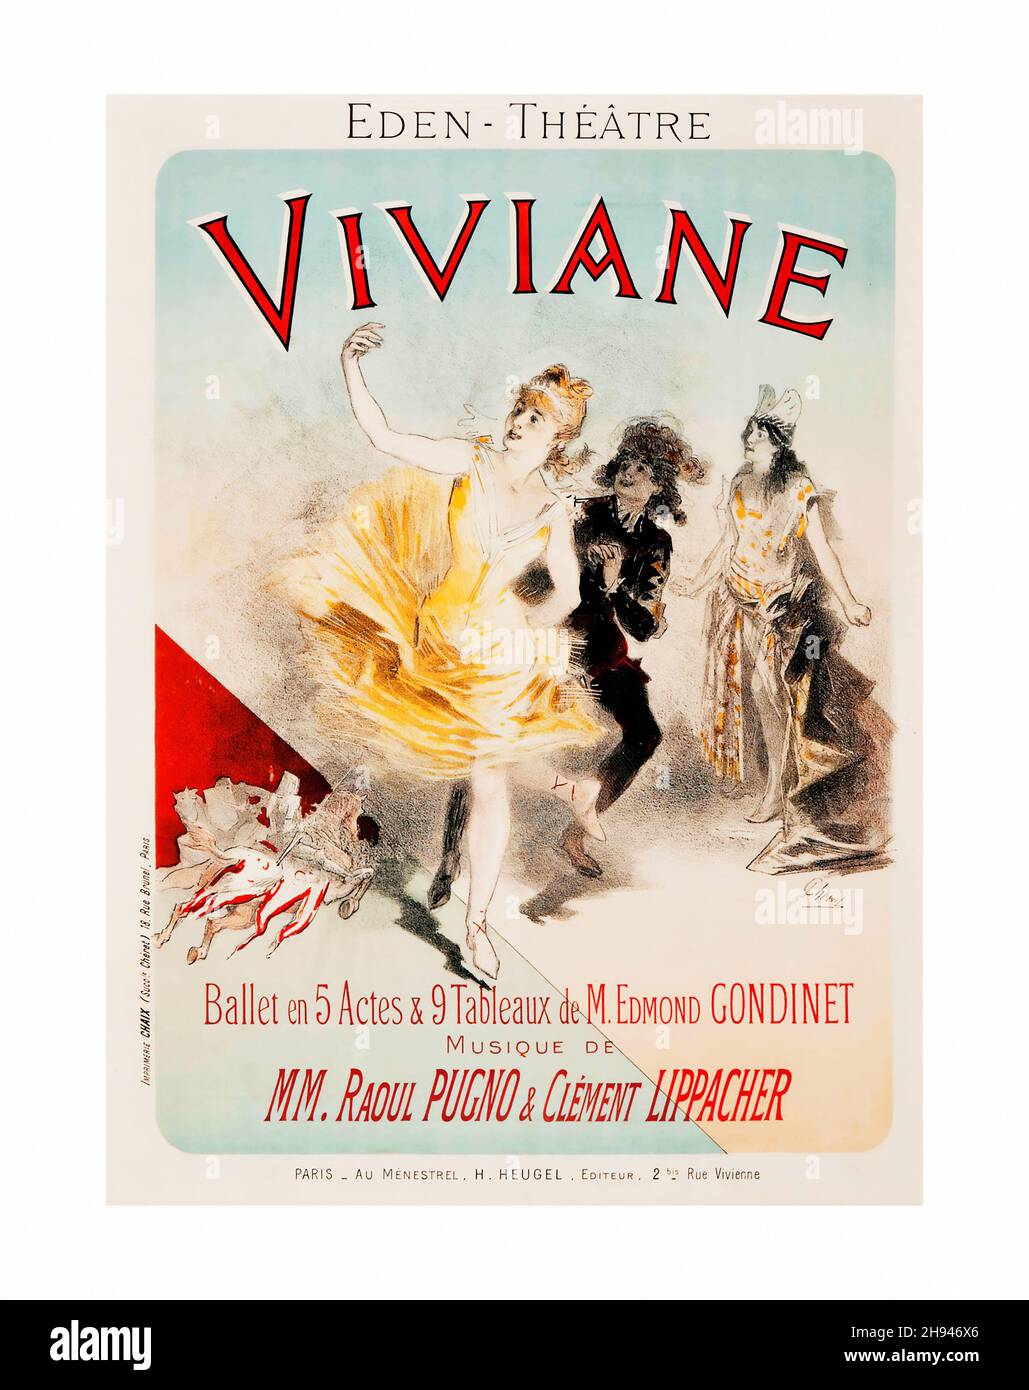 Viviane, Eden-Theatre - Poster art by Jules Chéret (1836-1932). French. Stock Photo